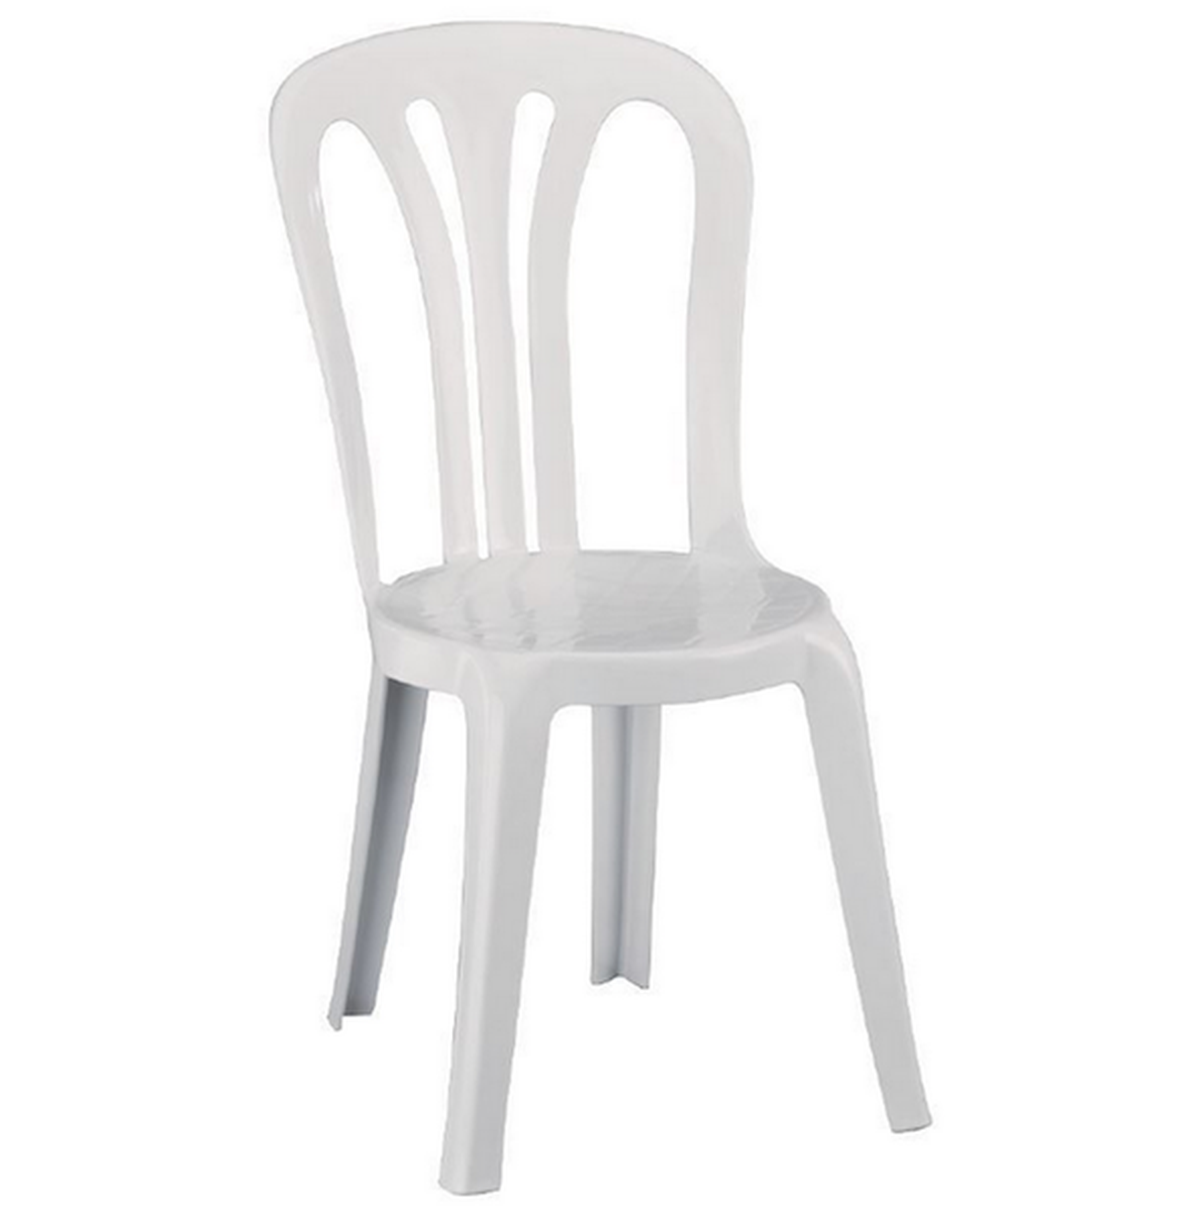 category_FO1001 - Bistro Garden Chair White